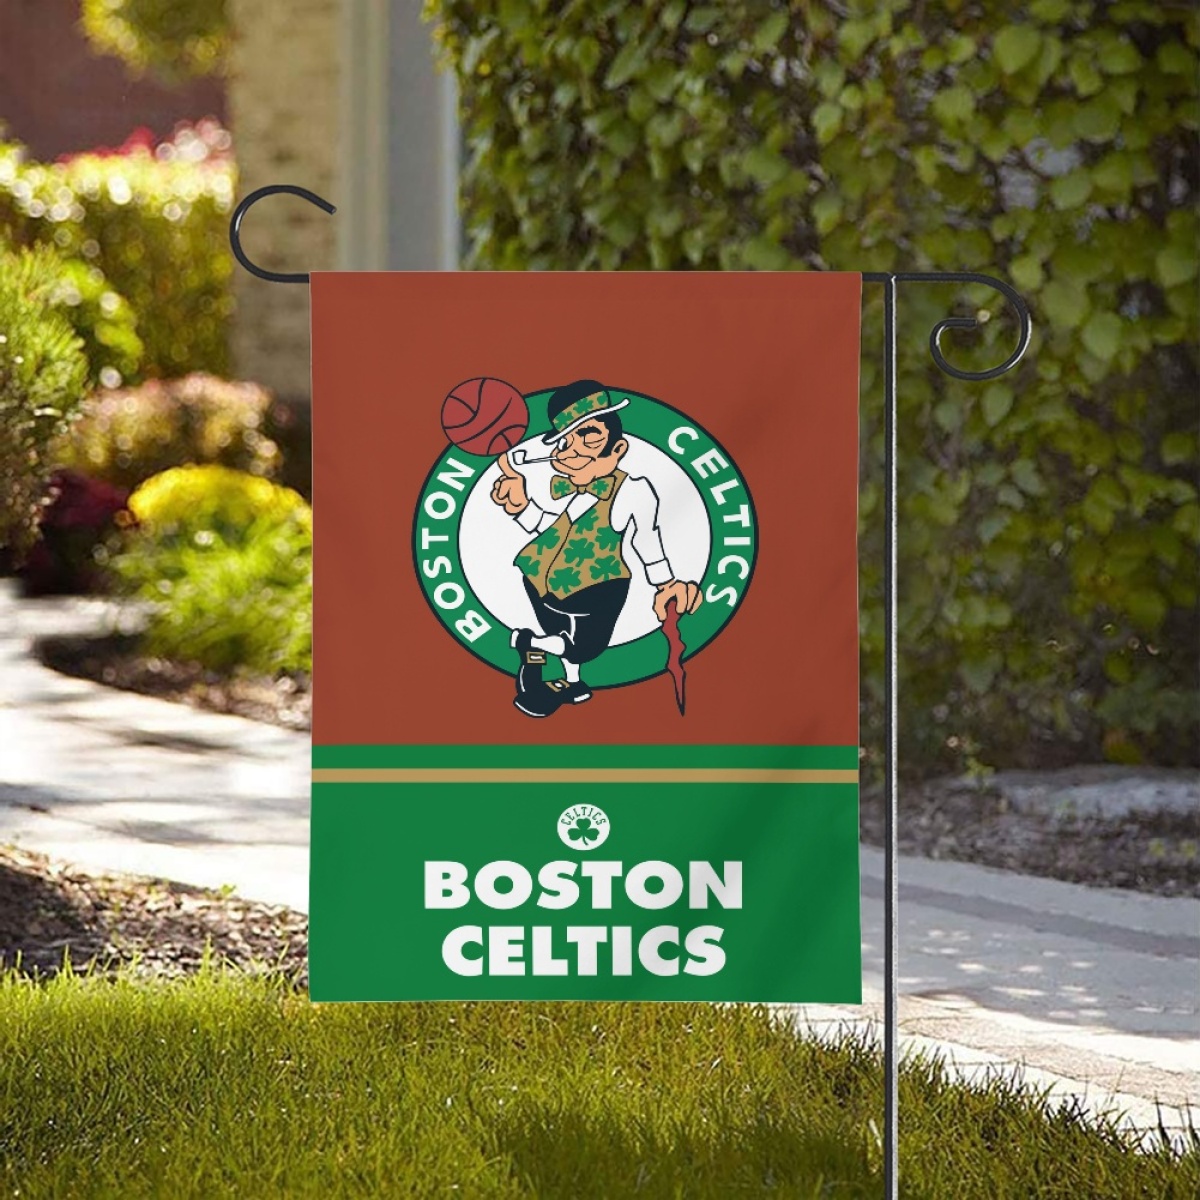 Boston Celtics Double-Sided Garden Flag 001 (Pls check description for details)